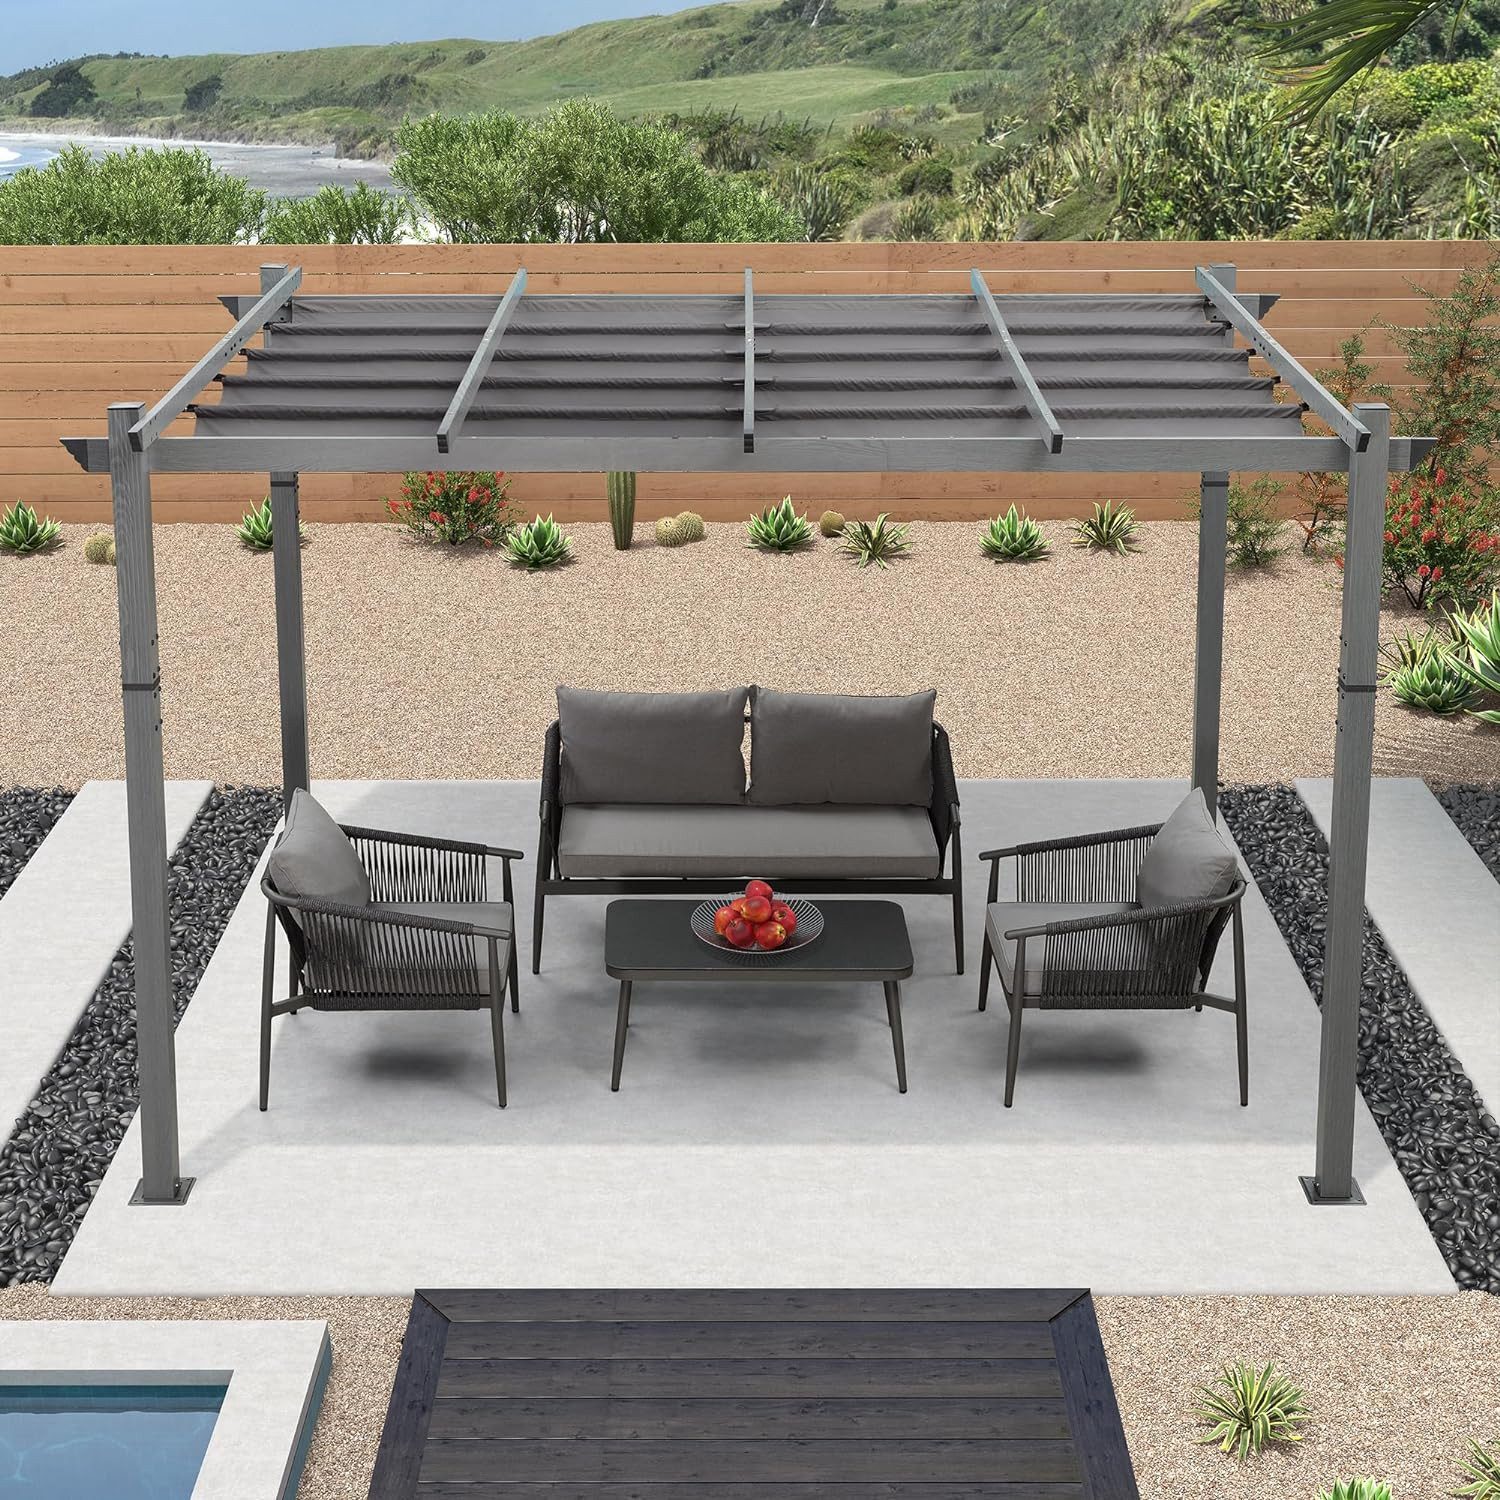 PURPLE LEAF Pergola 3 x 3 m Pergola, Gartenpavillon mit Sonnenschutz Überdachung, Rahmen aus Aluminium mit Holzmaserung, Wasserdicht, stabil